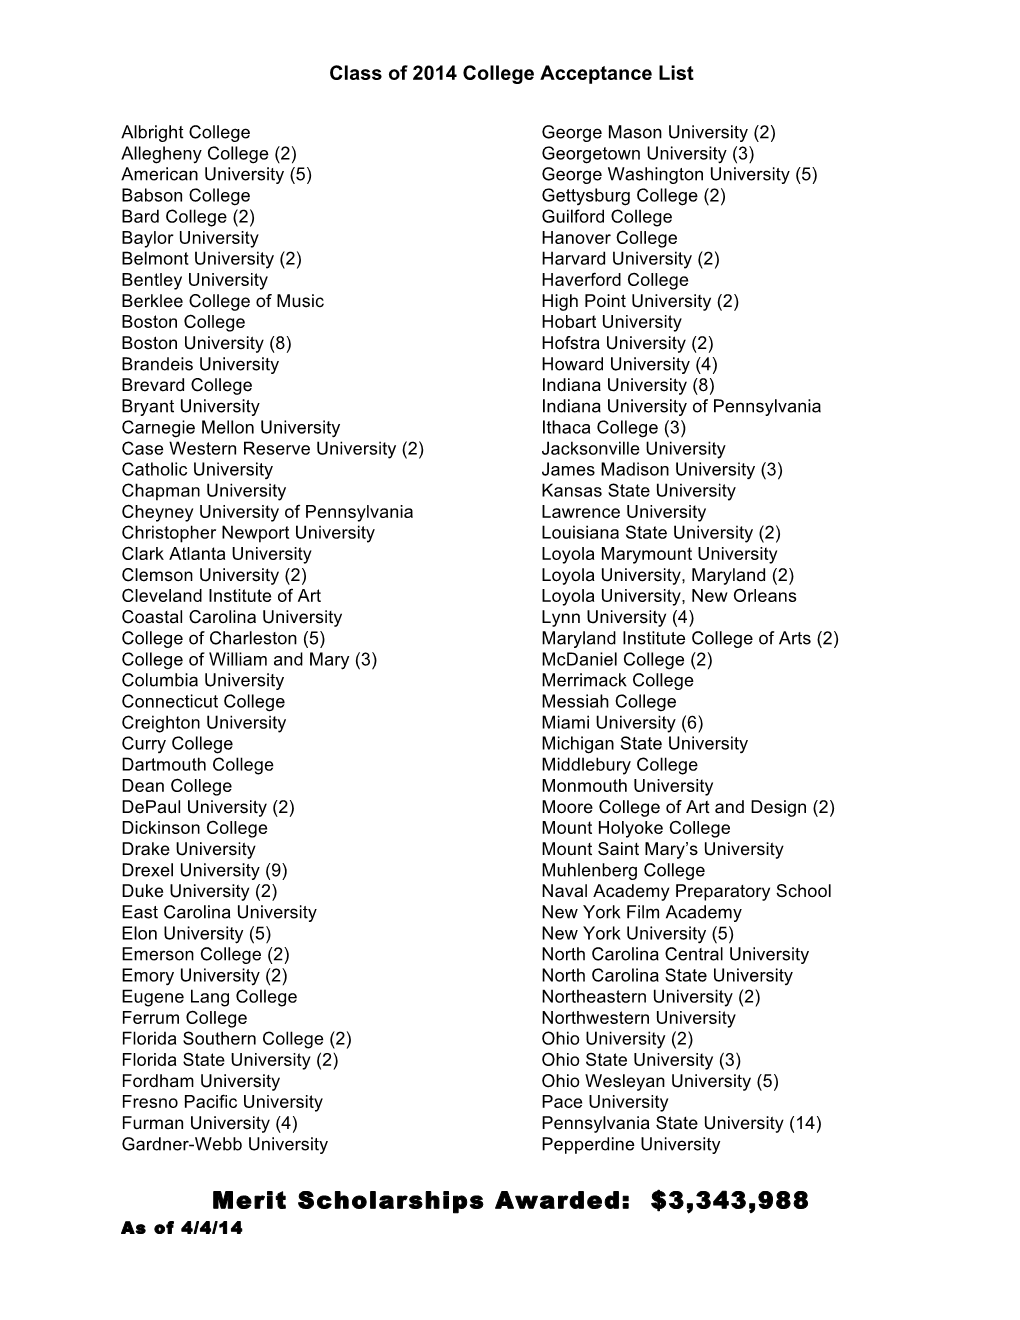 Class of 2014 Acceptance List-3